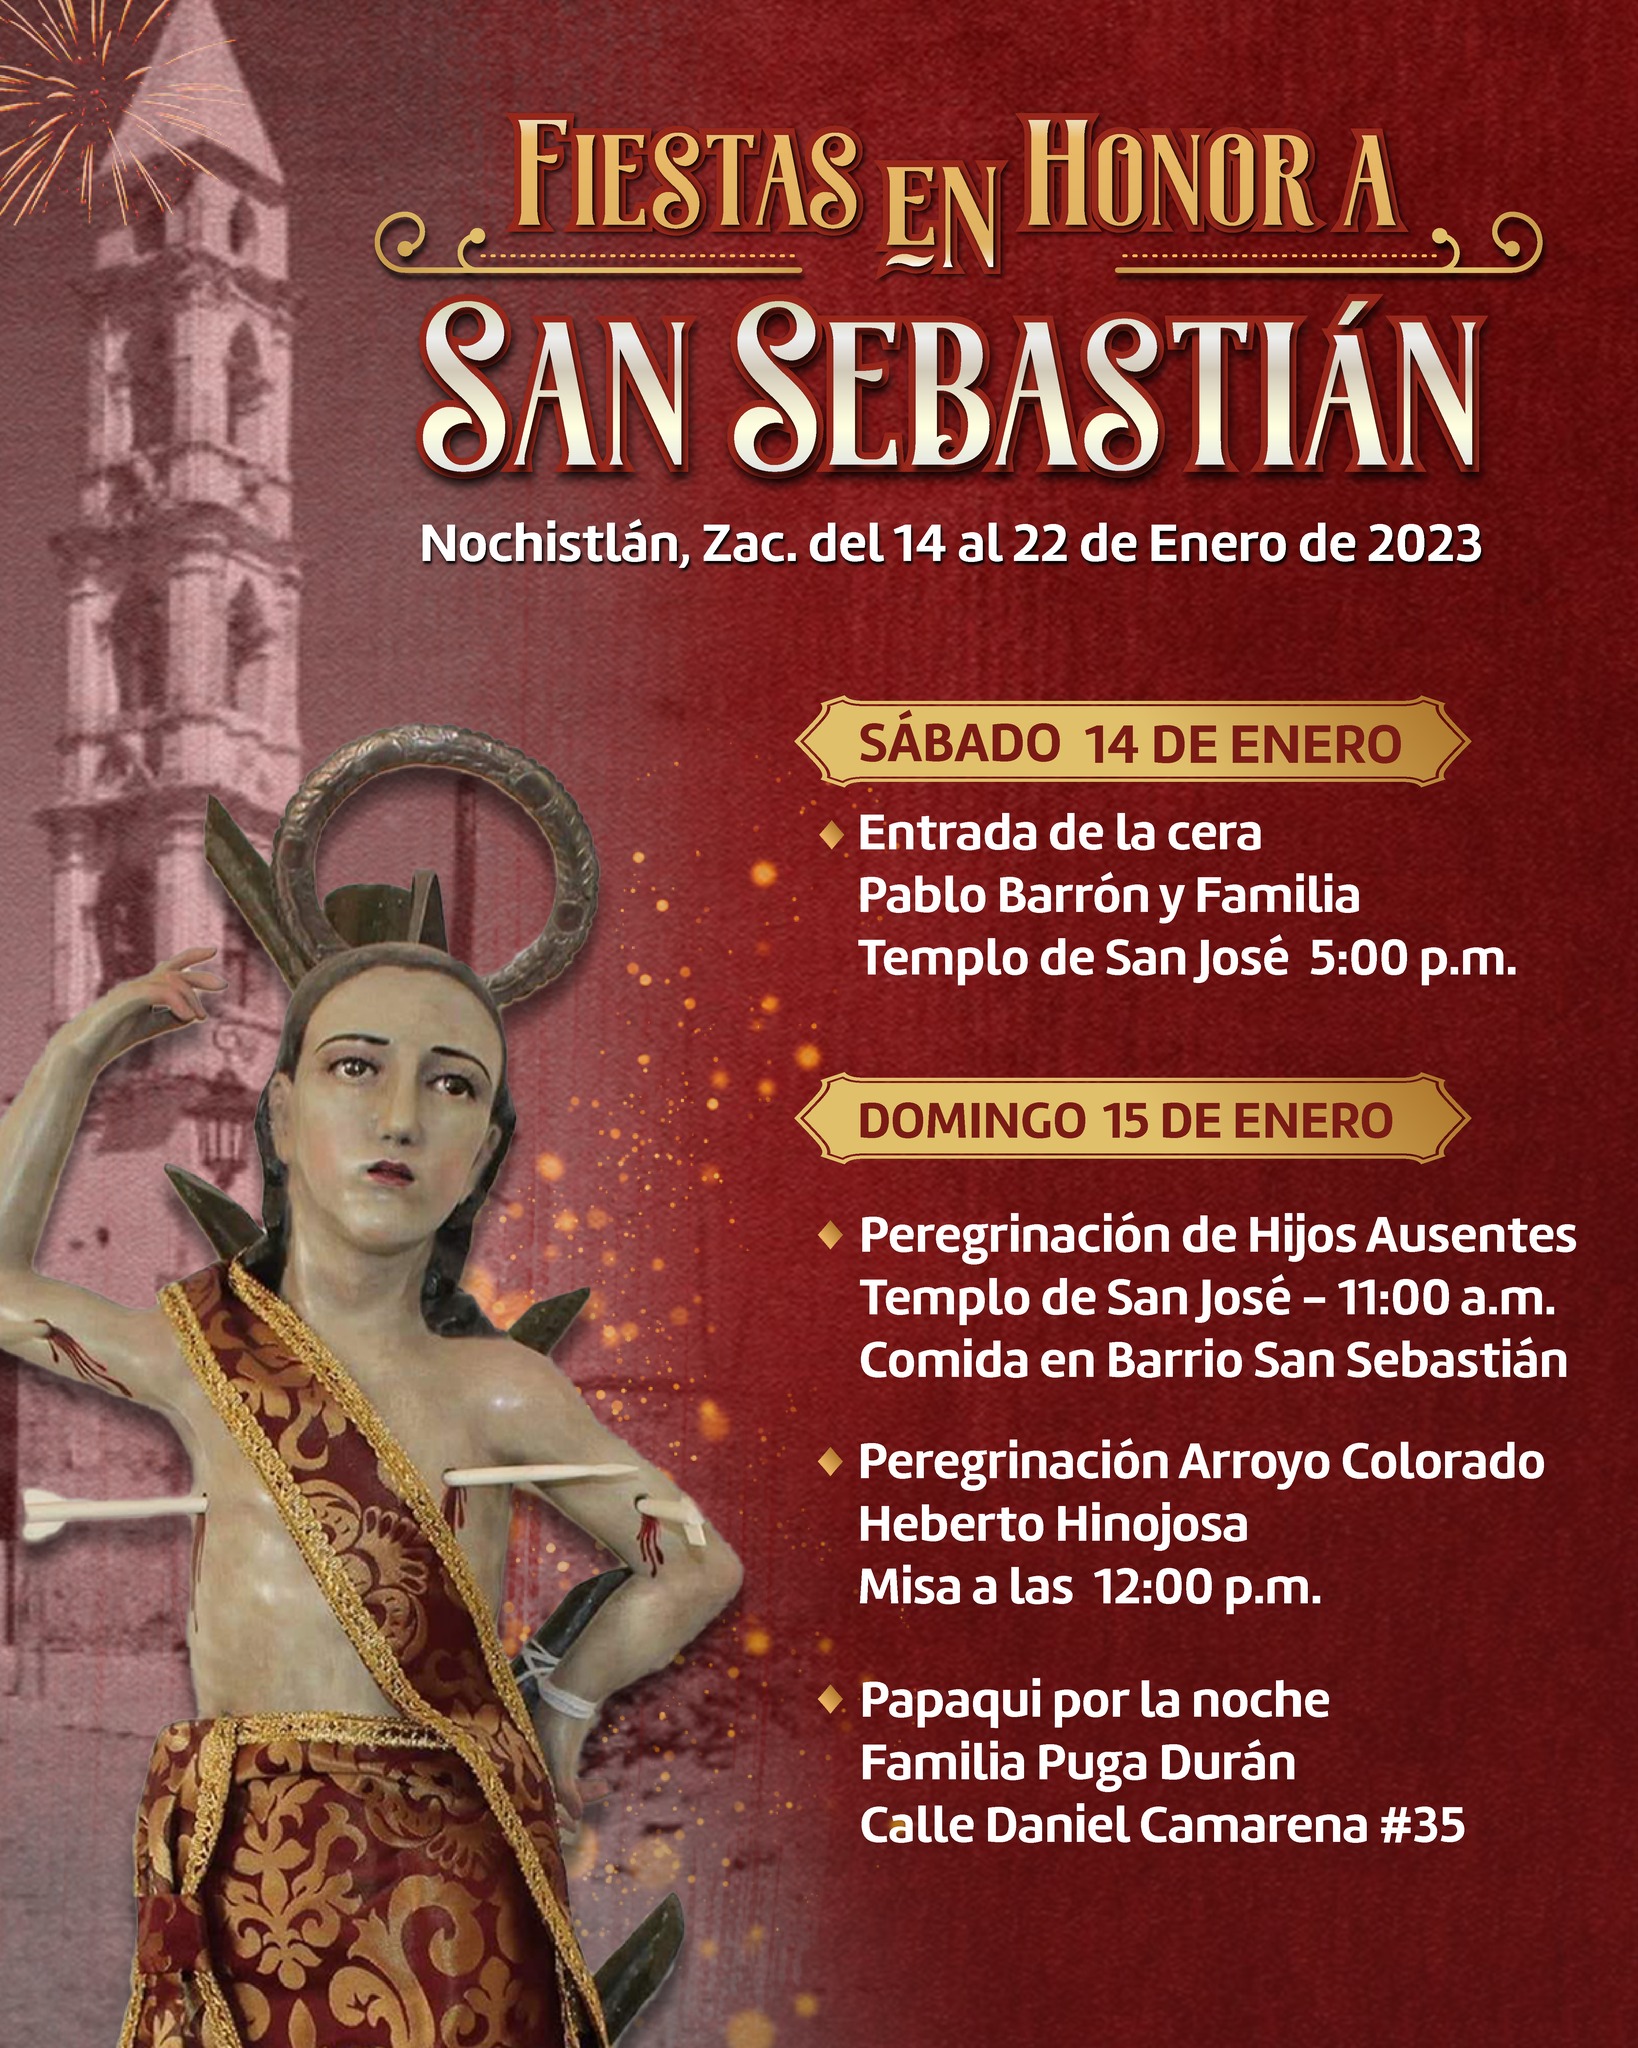 Programa de actividades de las Fiestas a San Sebastián.